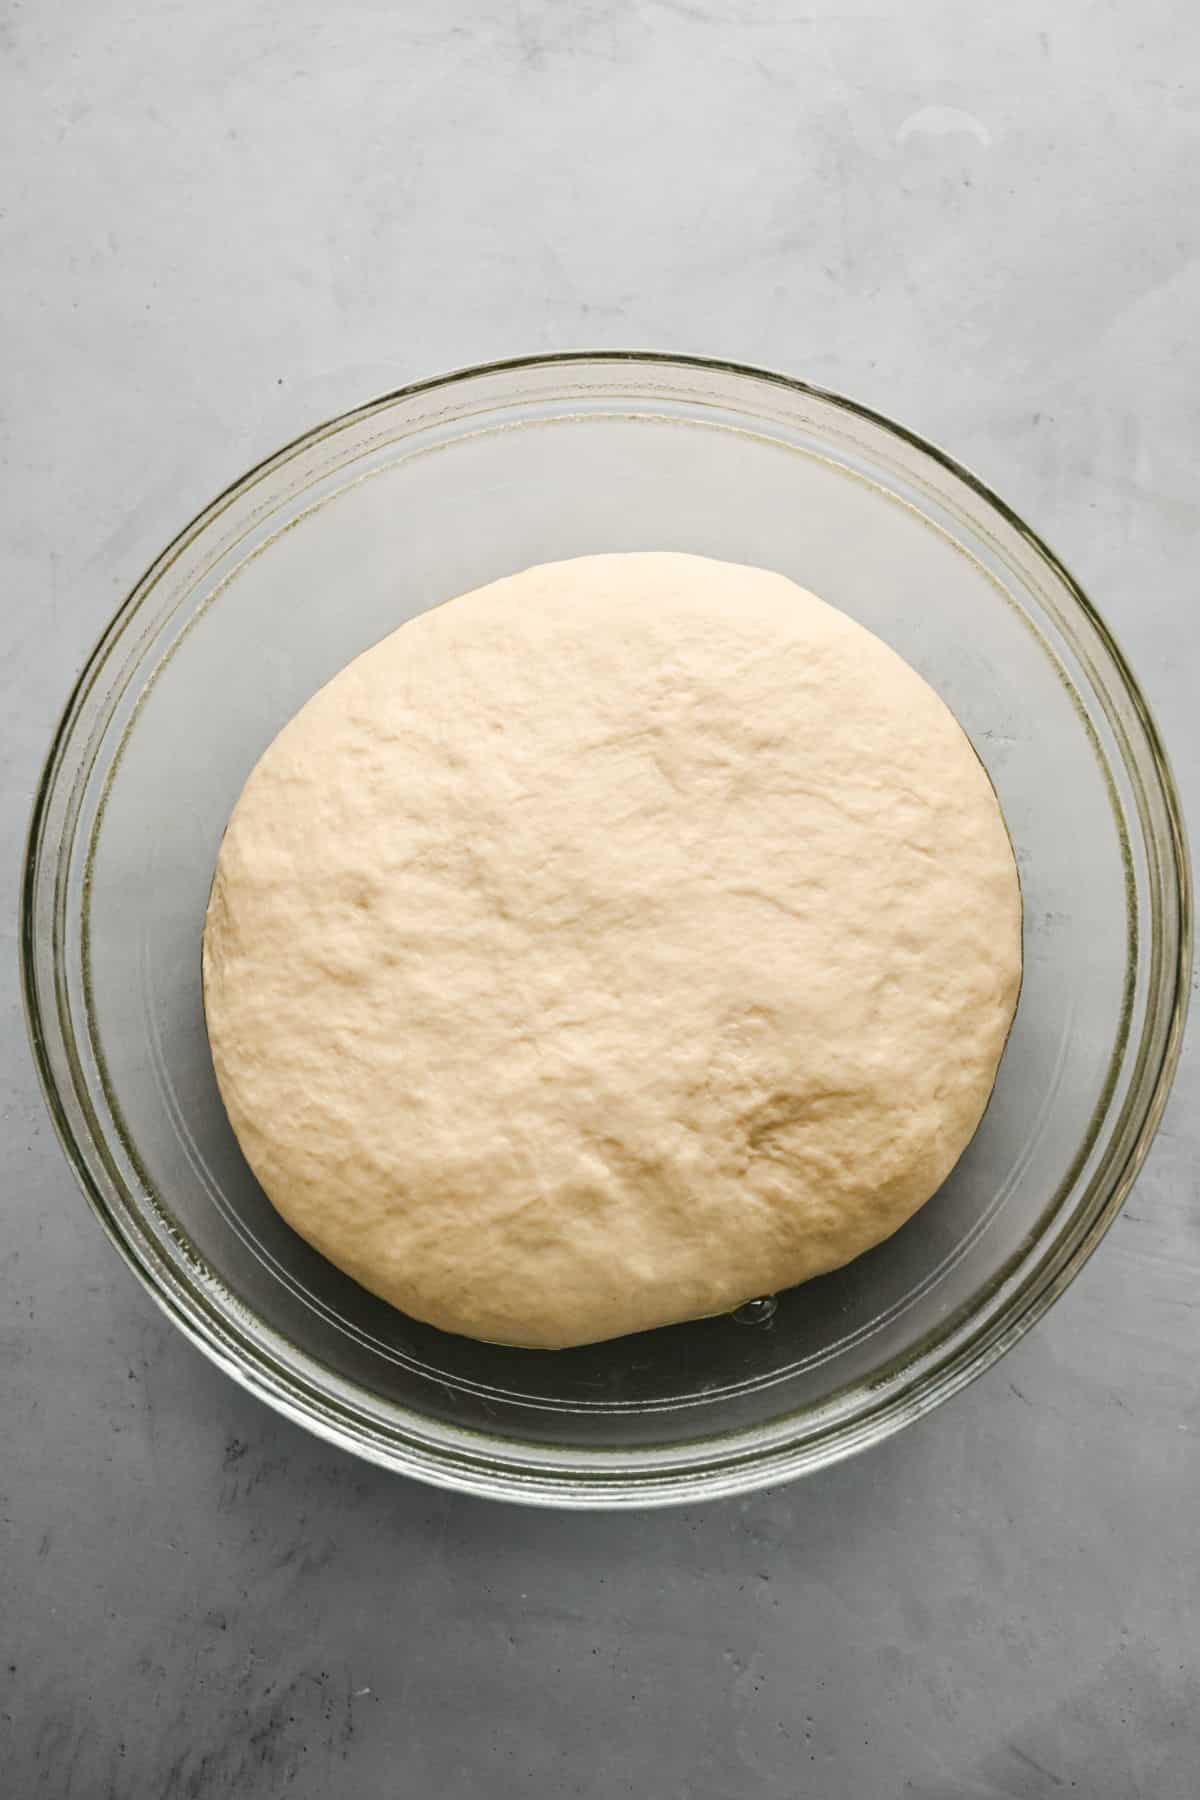 Risen flatbread dough in a glass mixing bowl. 